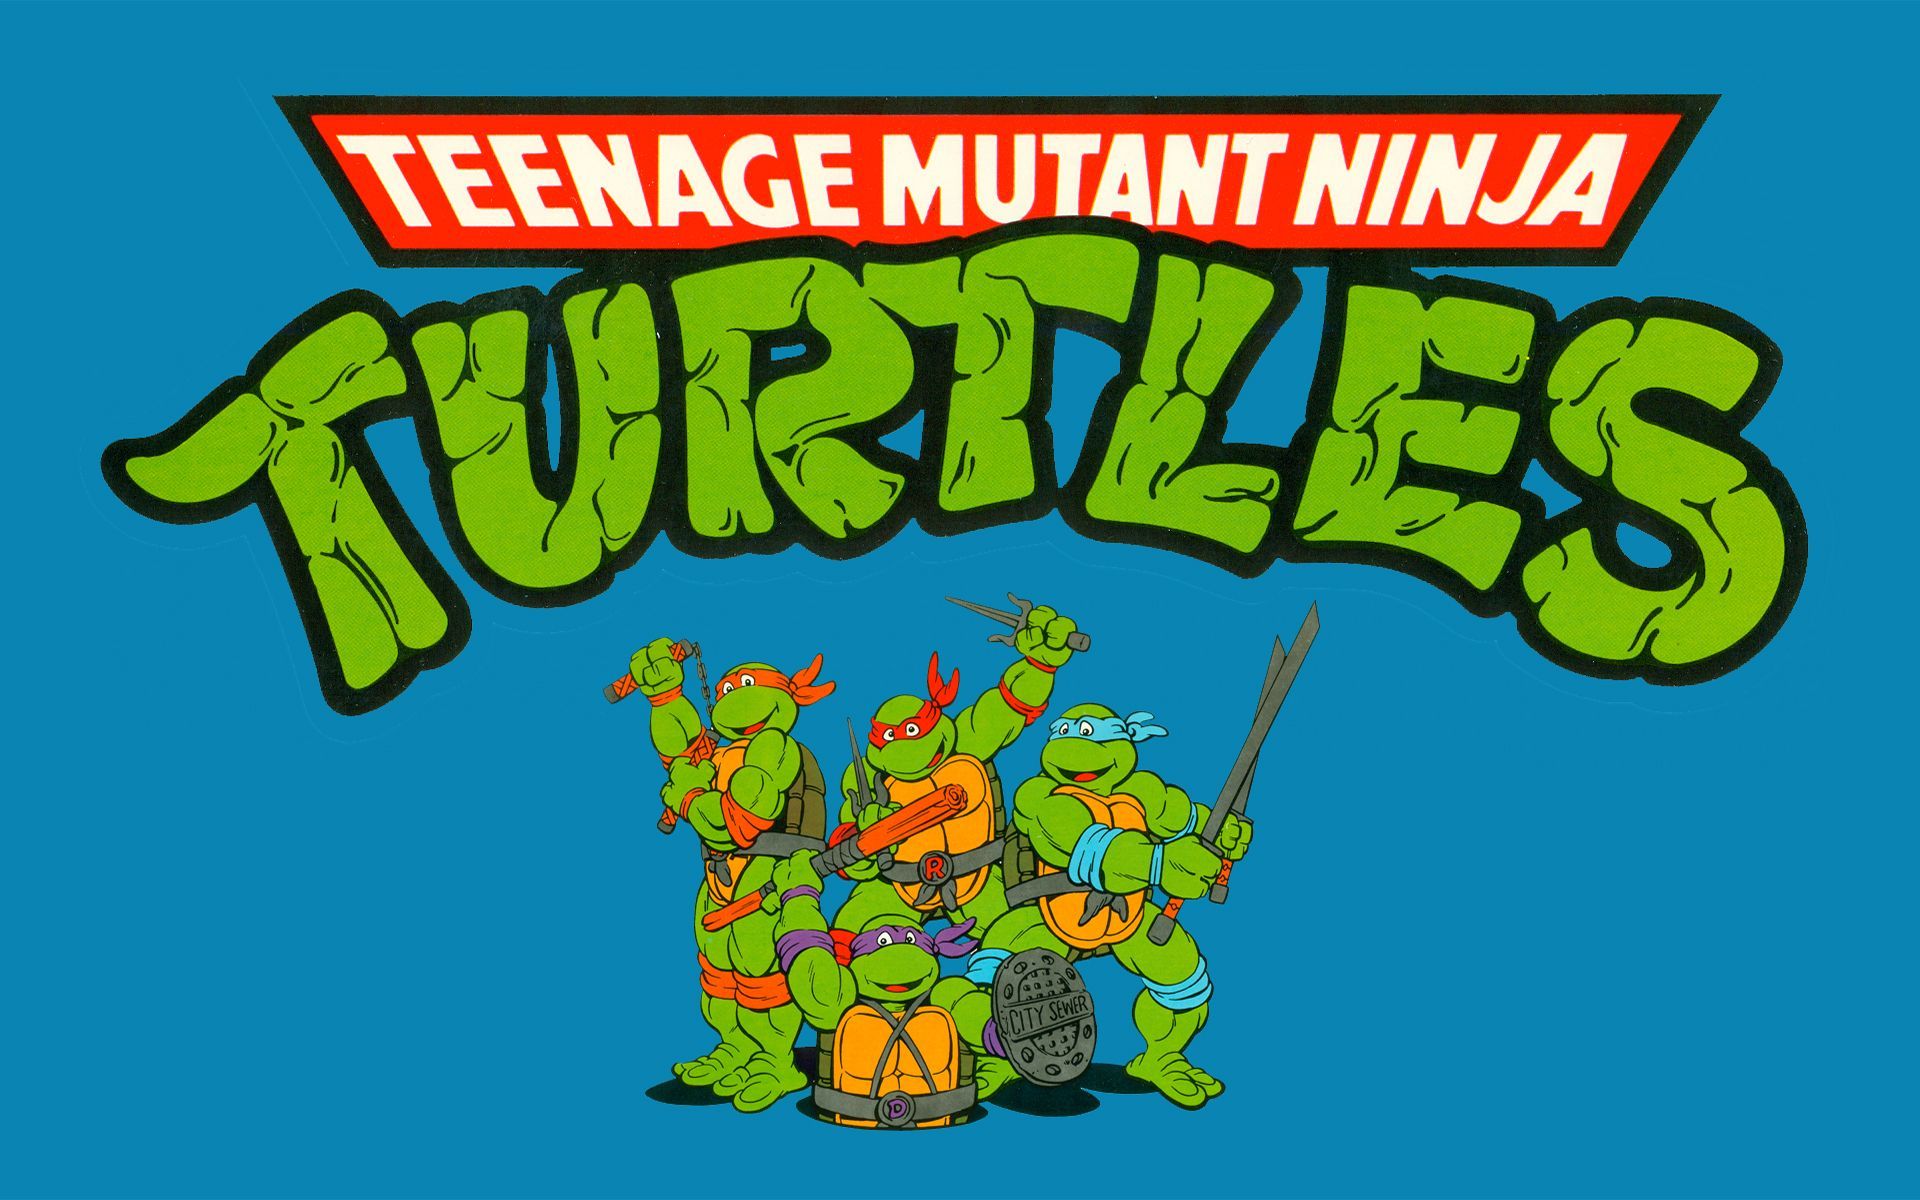 Cartoon Wallpaper. Ninja turtles picture, Tmnt wallpaper, Ninja turtles cartoon